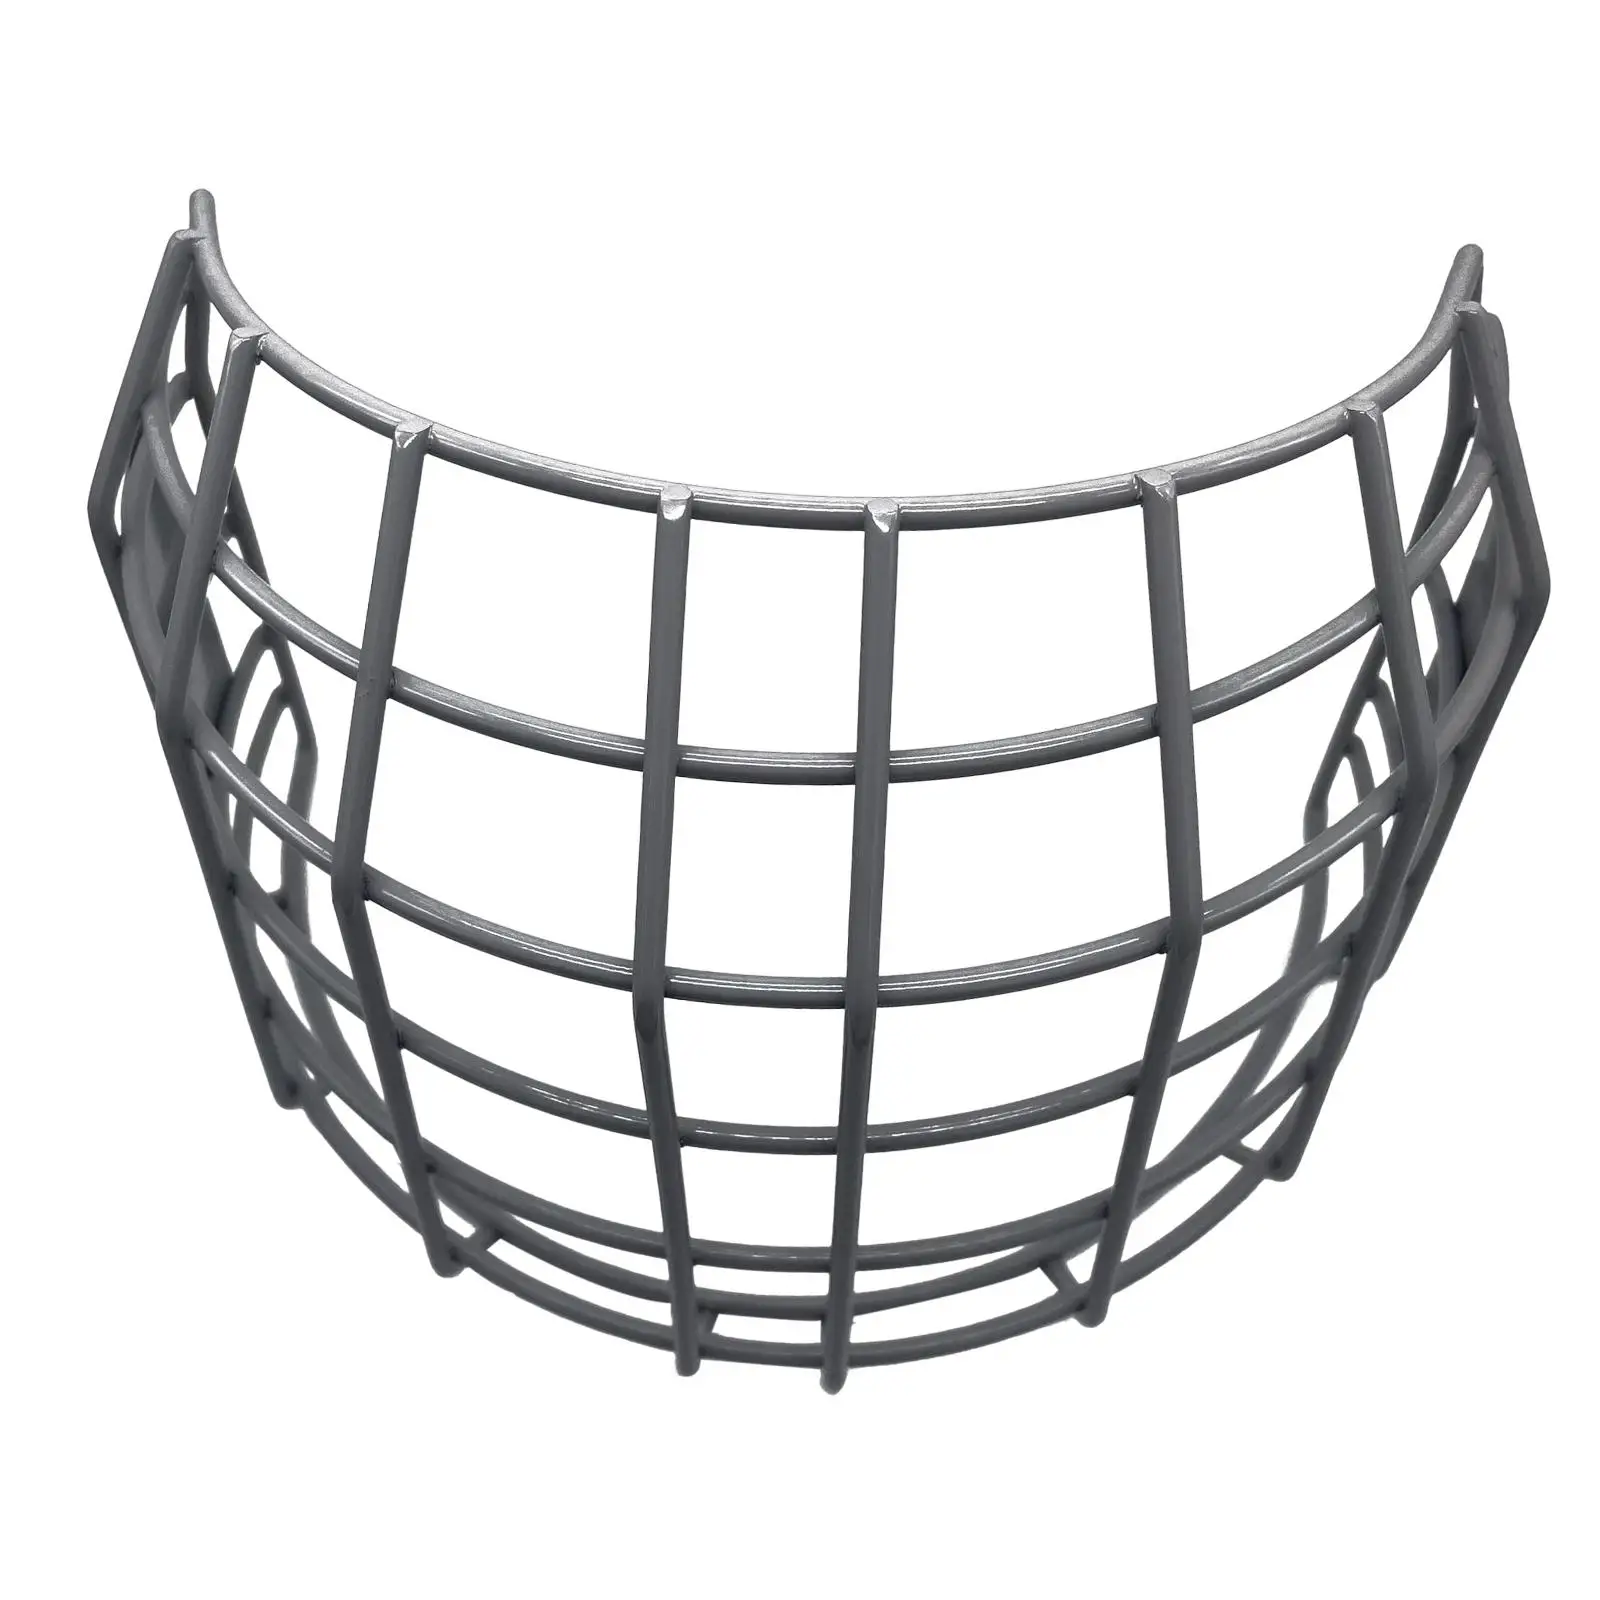 Universal Batting Helmet Safety Mask Protector Baseball Face Guard for Softball Ice Hockey Unisex Junior Youth Kids